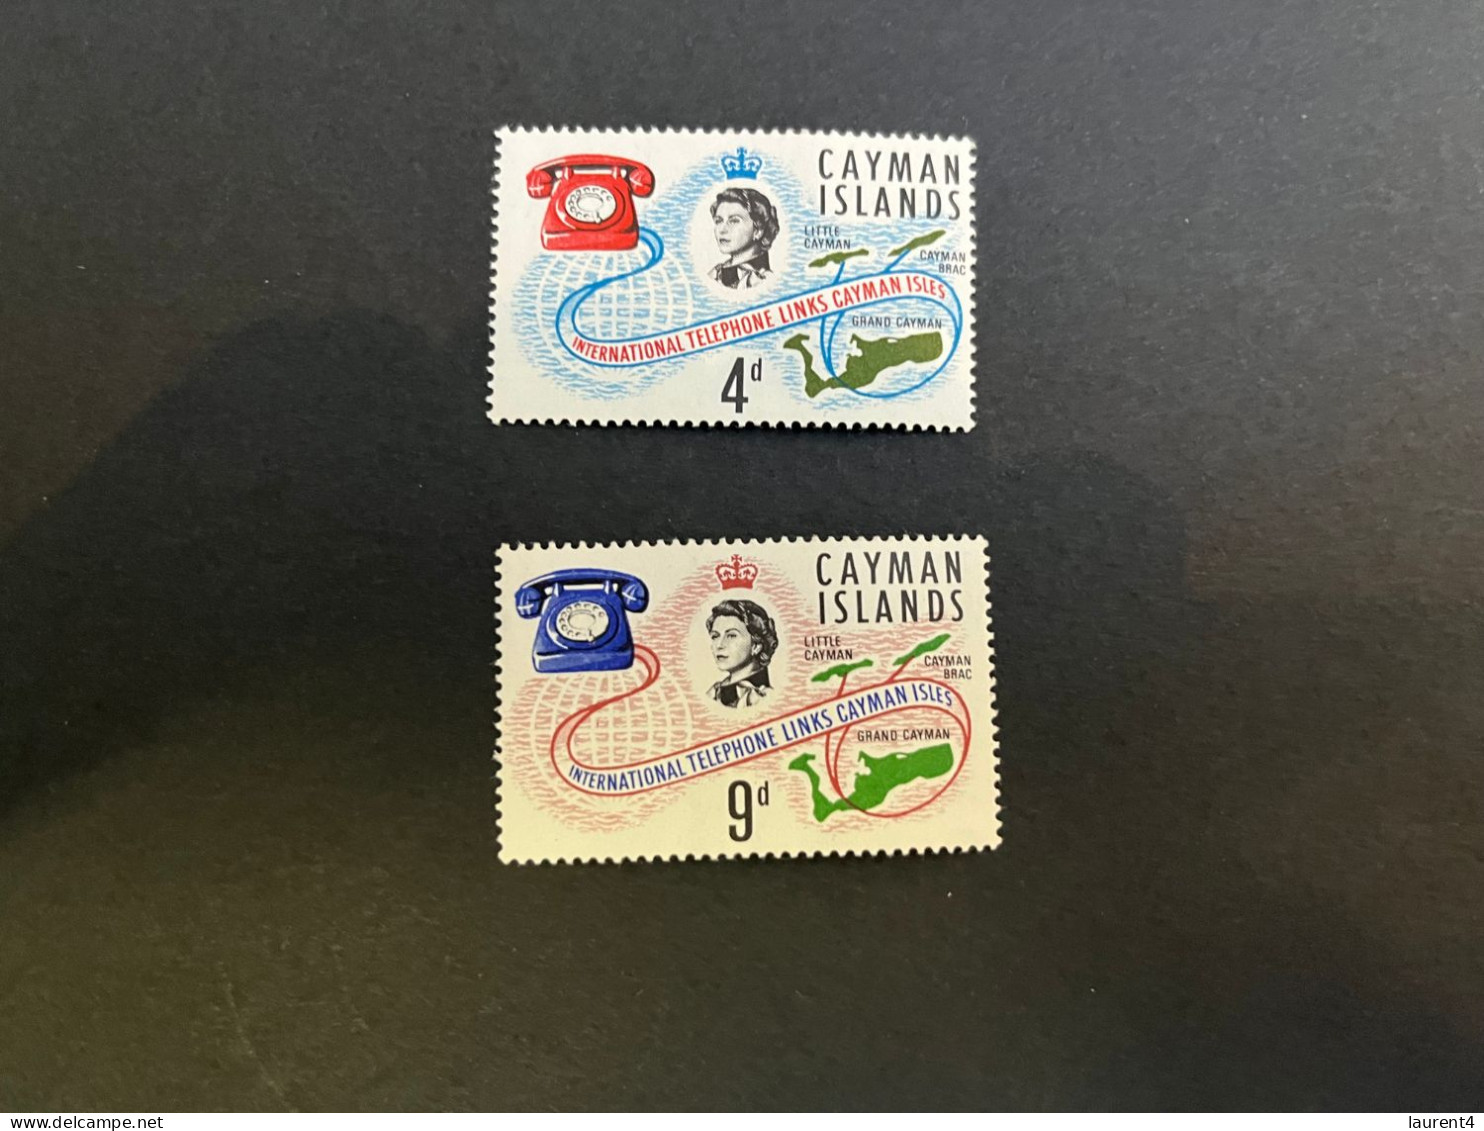 14-5-2024 (stamp)  Cayman Islands (2 Values) Telephone Link - Cayman Islands